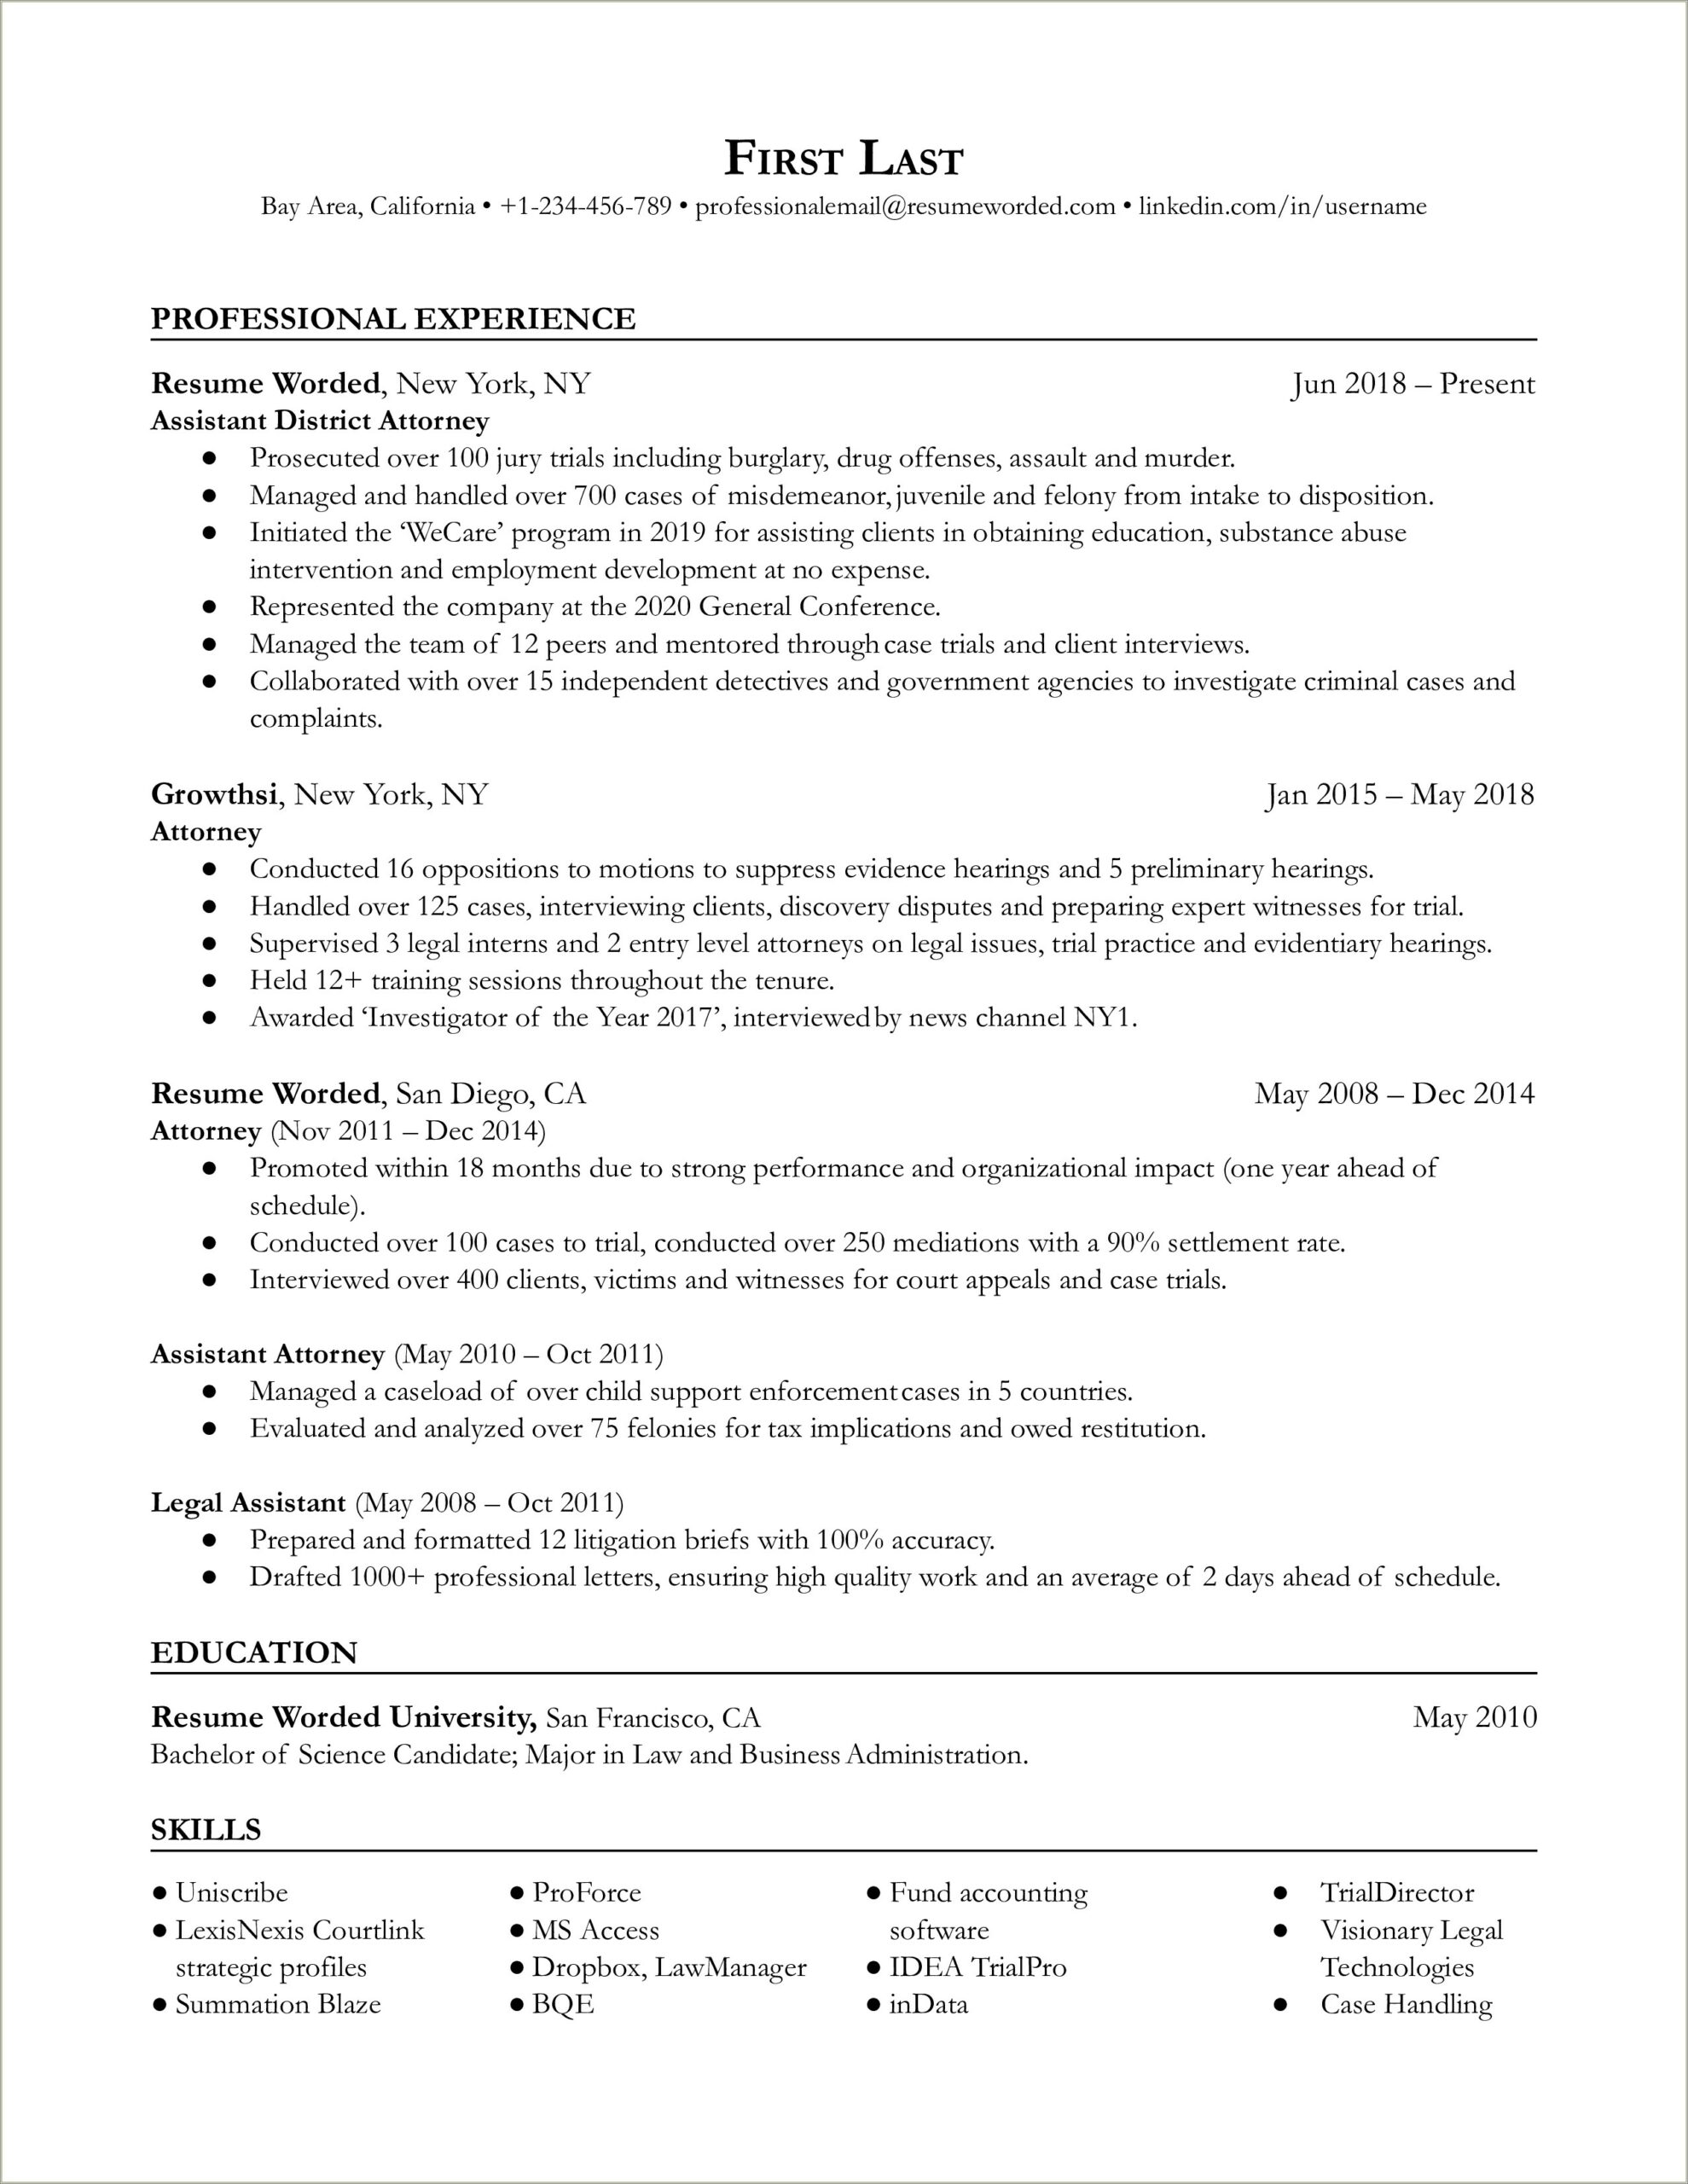 Legal Assistant Inter Job Description For Resume